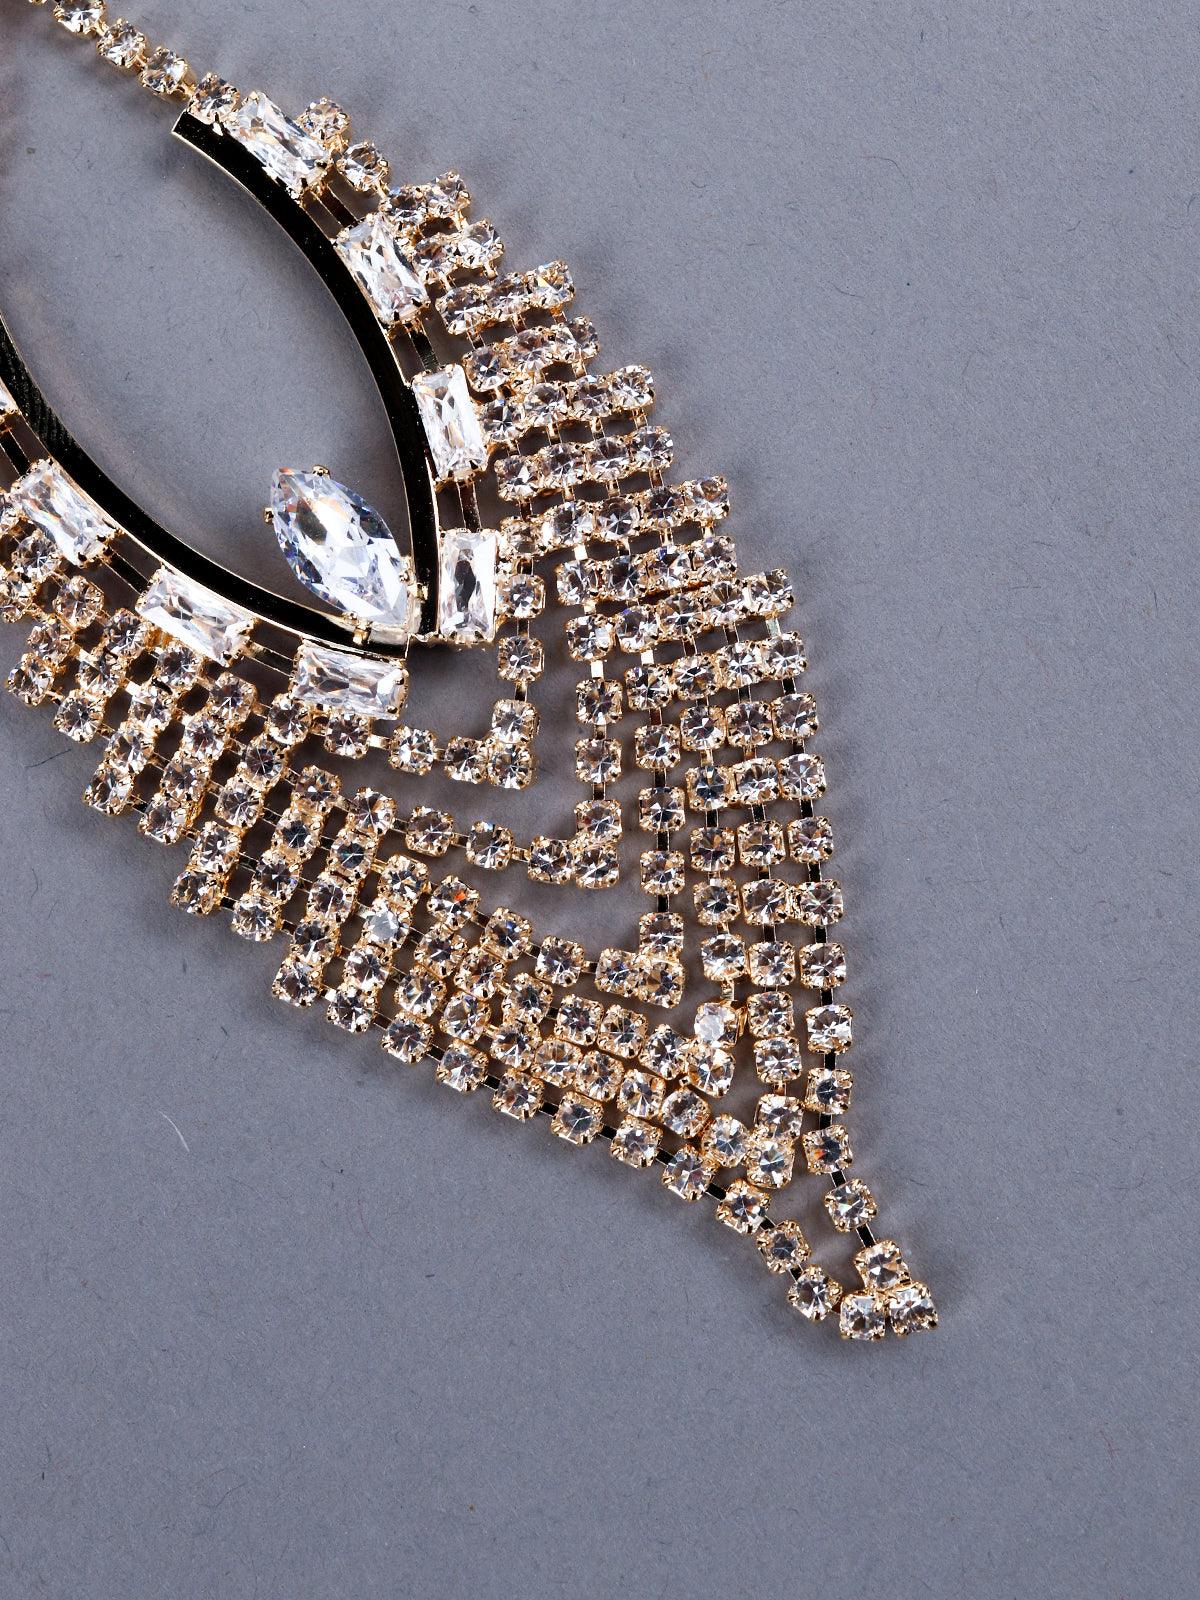 Women's Exquisite Almond-Shaped Crystal Earrings - Odette